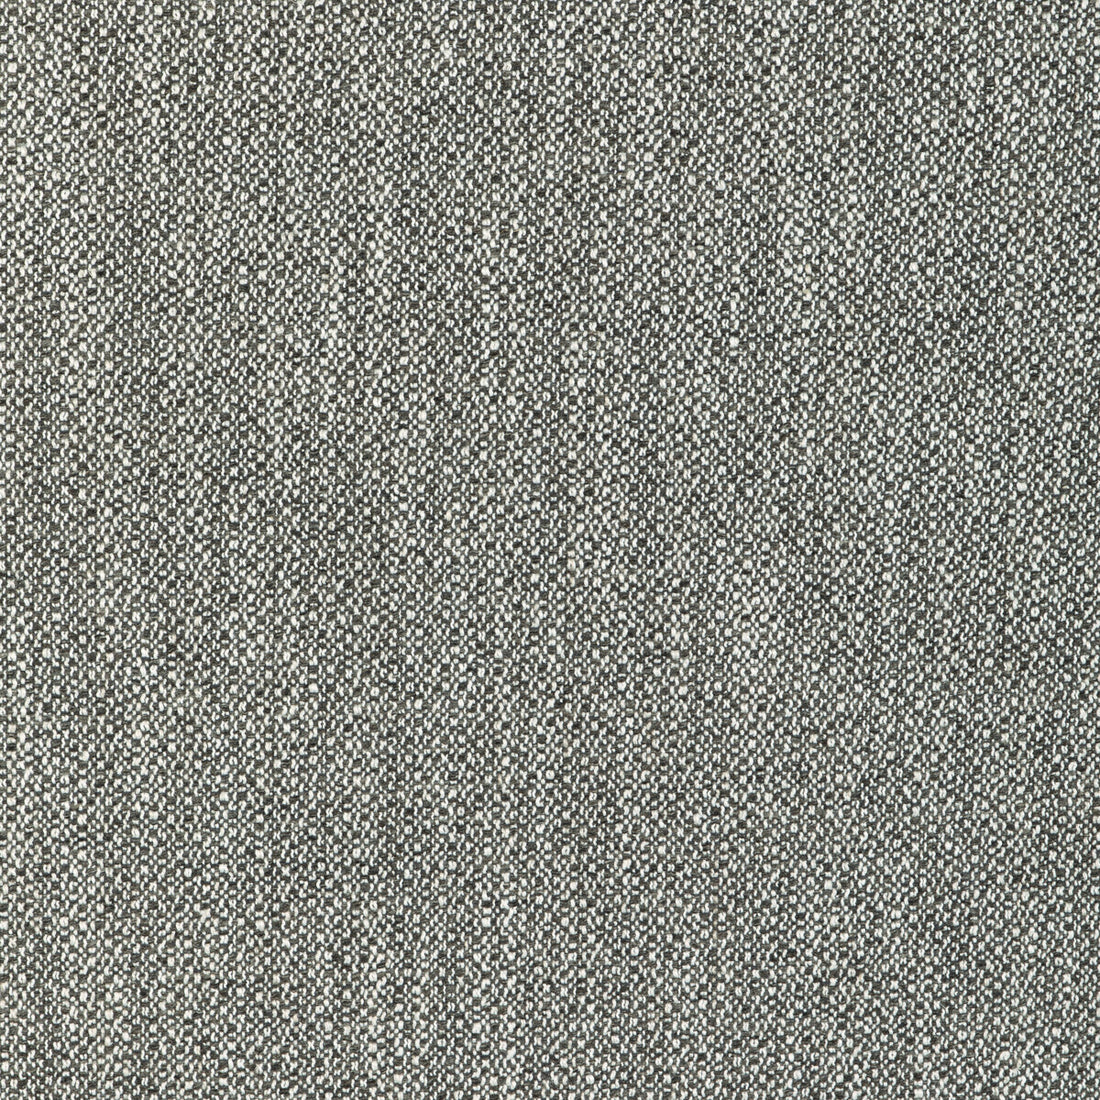 Torus fabric in flint color - pattern GWF-3793.8106.0 - by Lee Jofa Modern in the Kelly Wearstler VIII collection